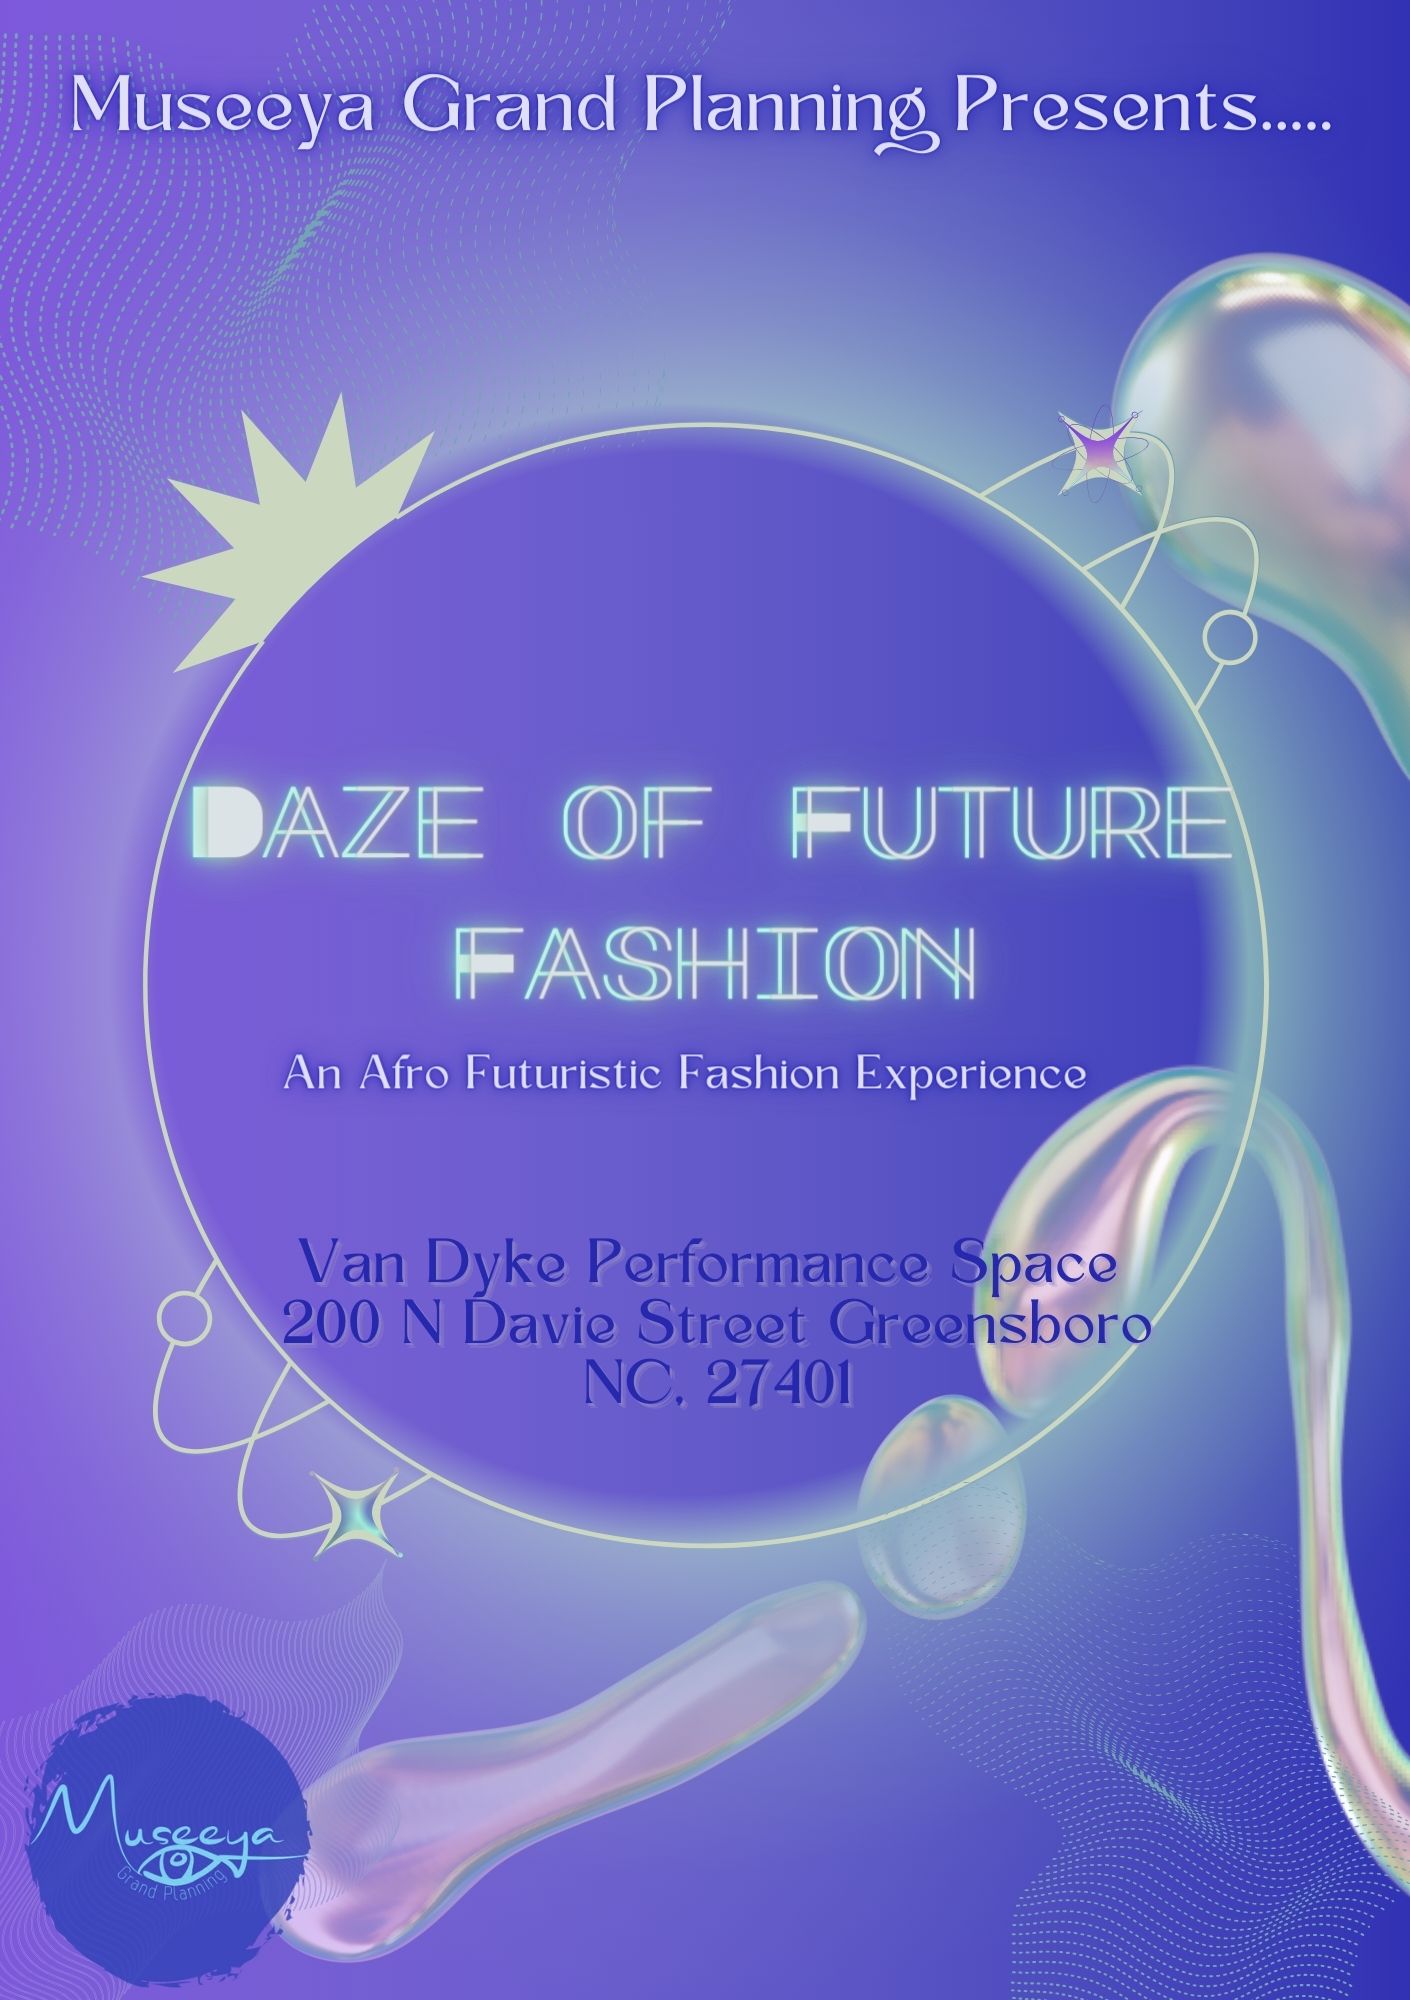 Daze-of-Future-Fashion-page-1.jpeg